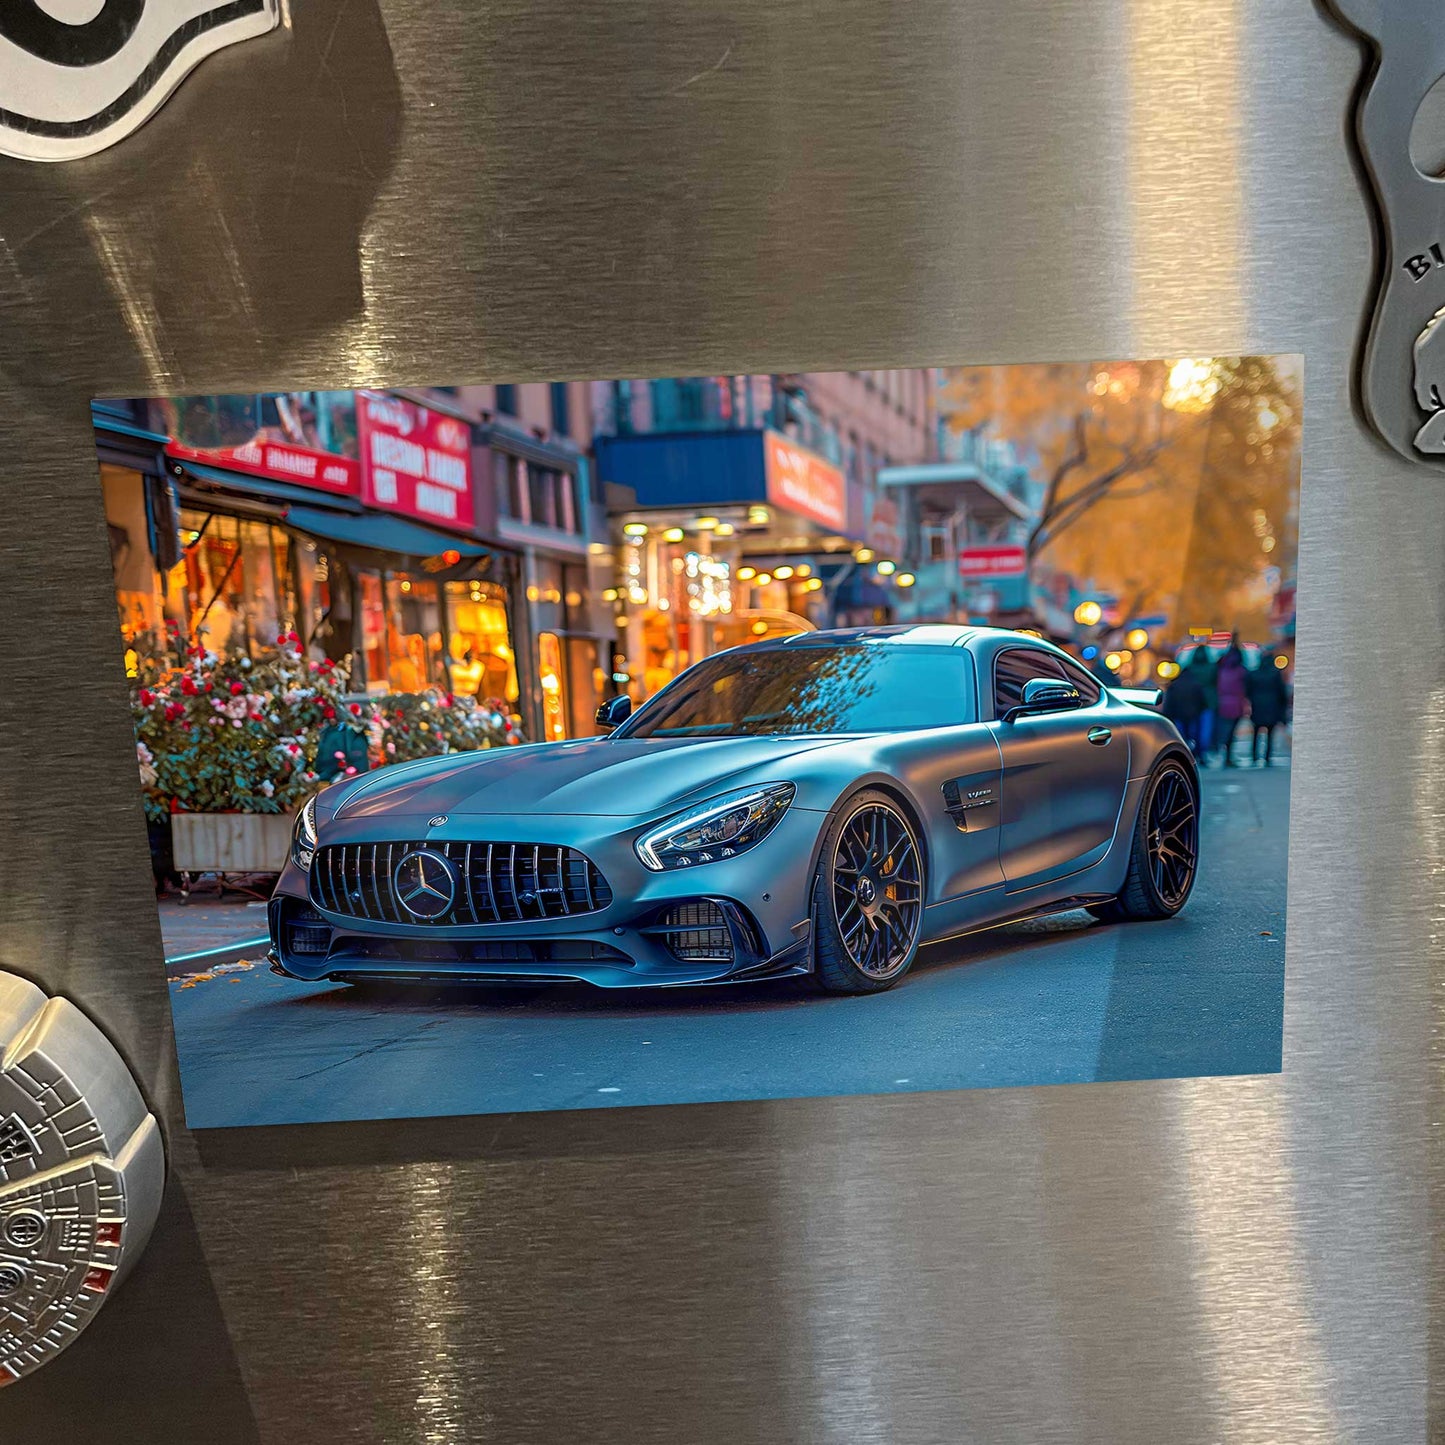 Cirrus Silver 2024 Mercedes AMG GT Metal Poster